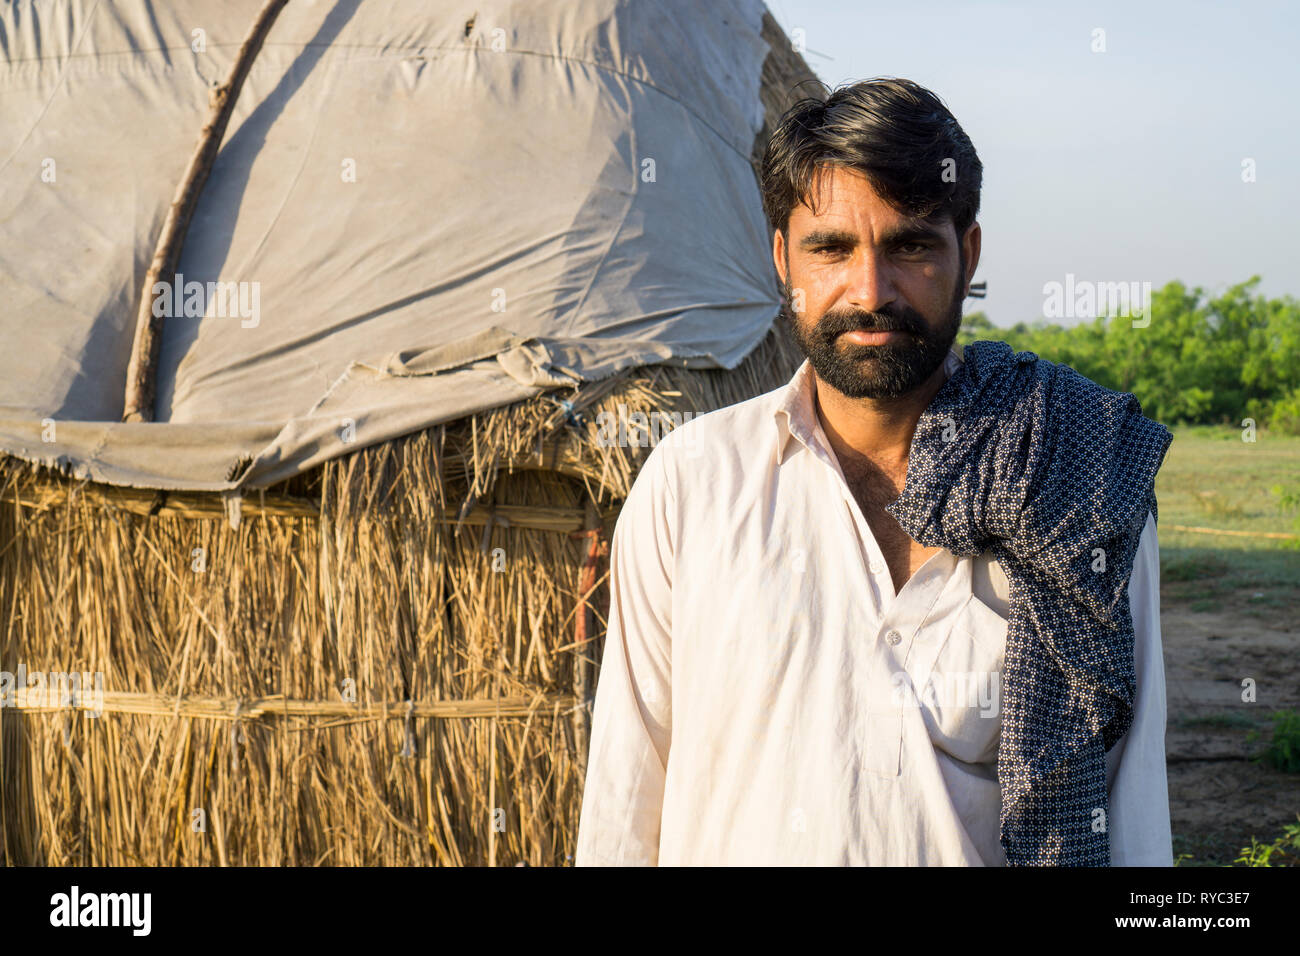 Pakistani man standing outdoors looking at camera Stock Photo